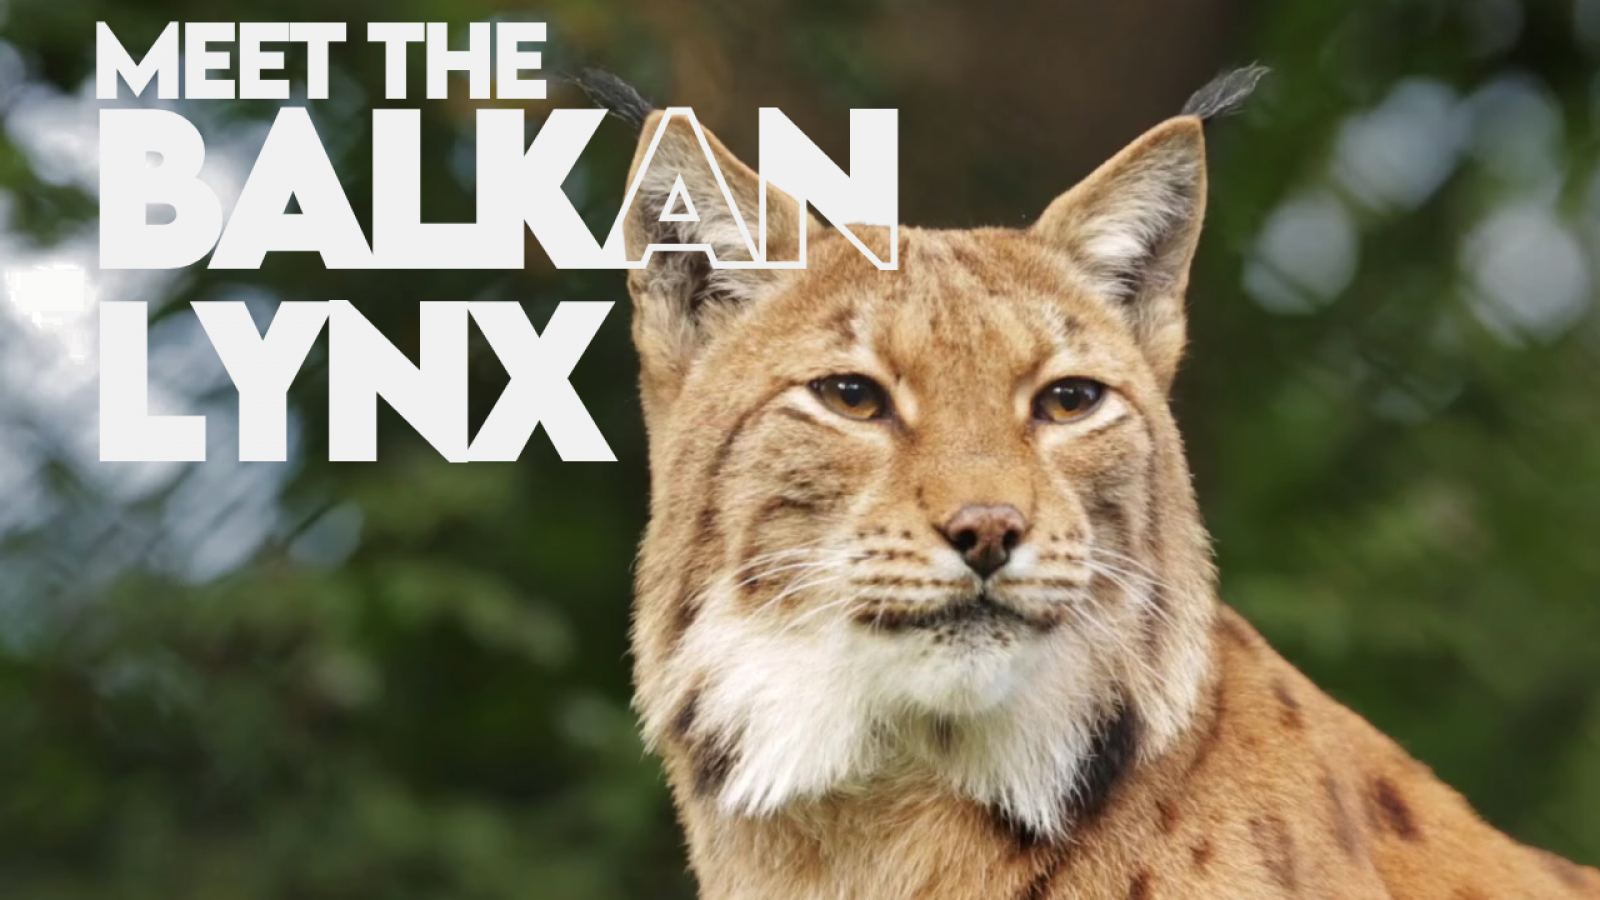 Meet the Balkan Lynx